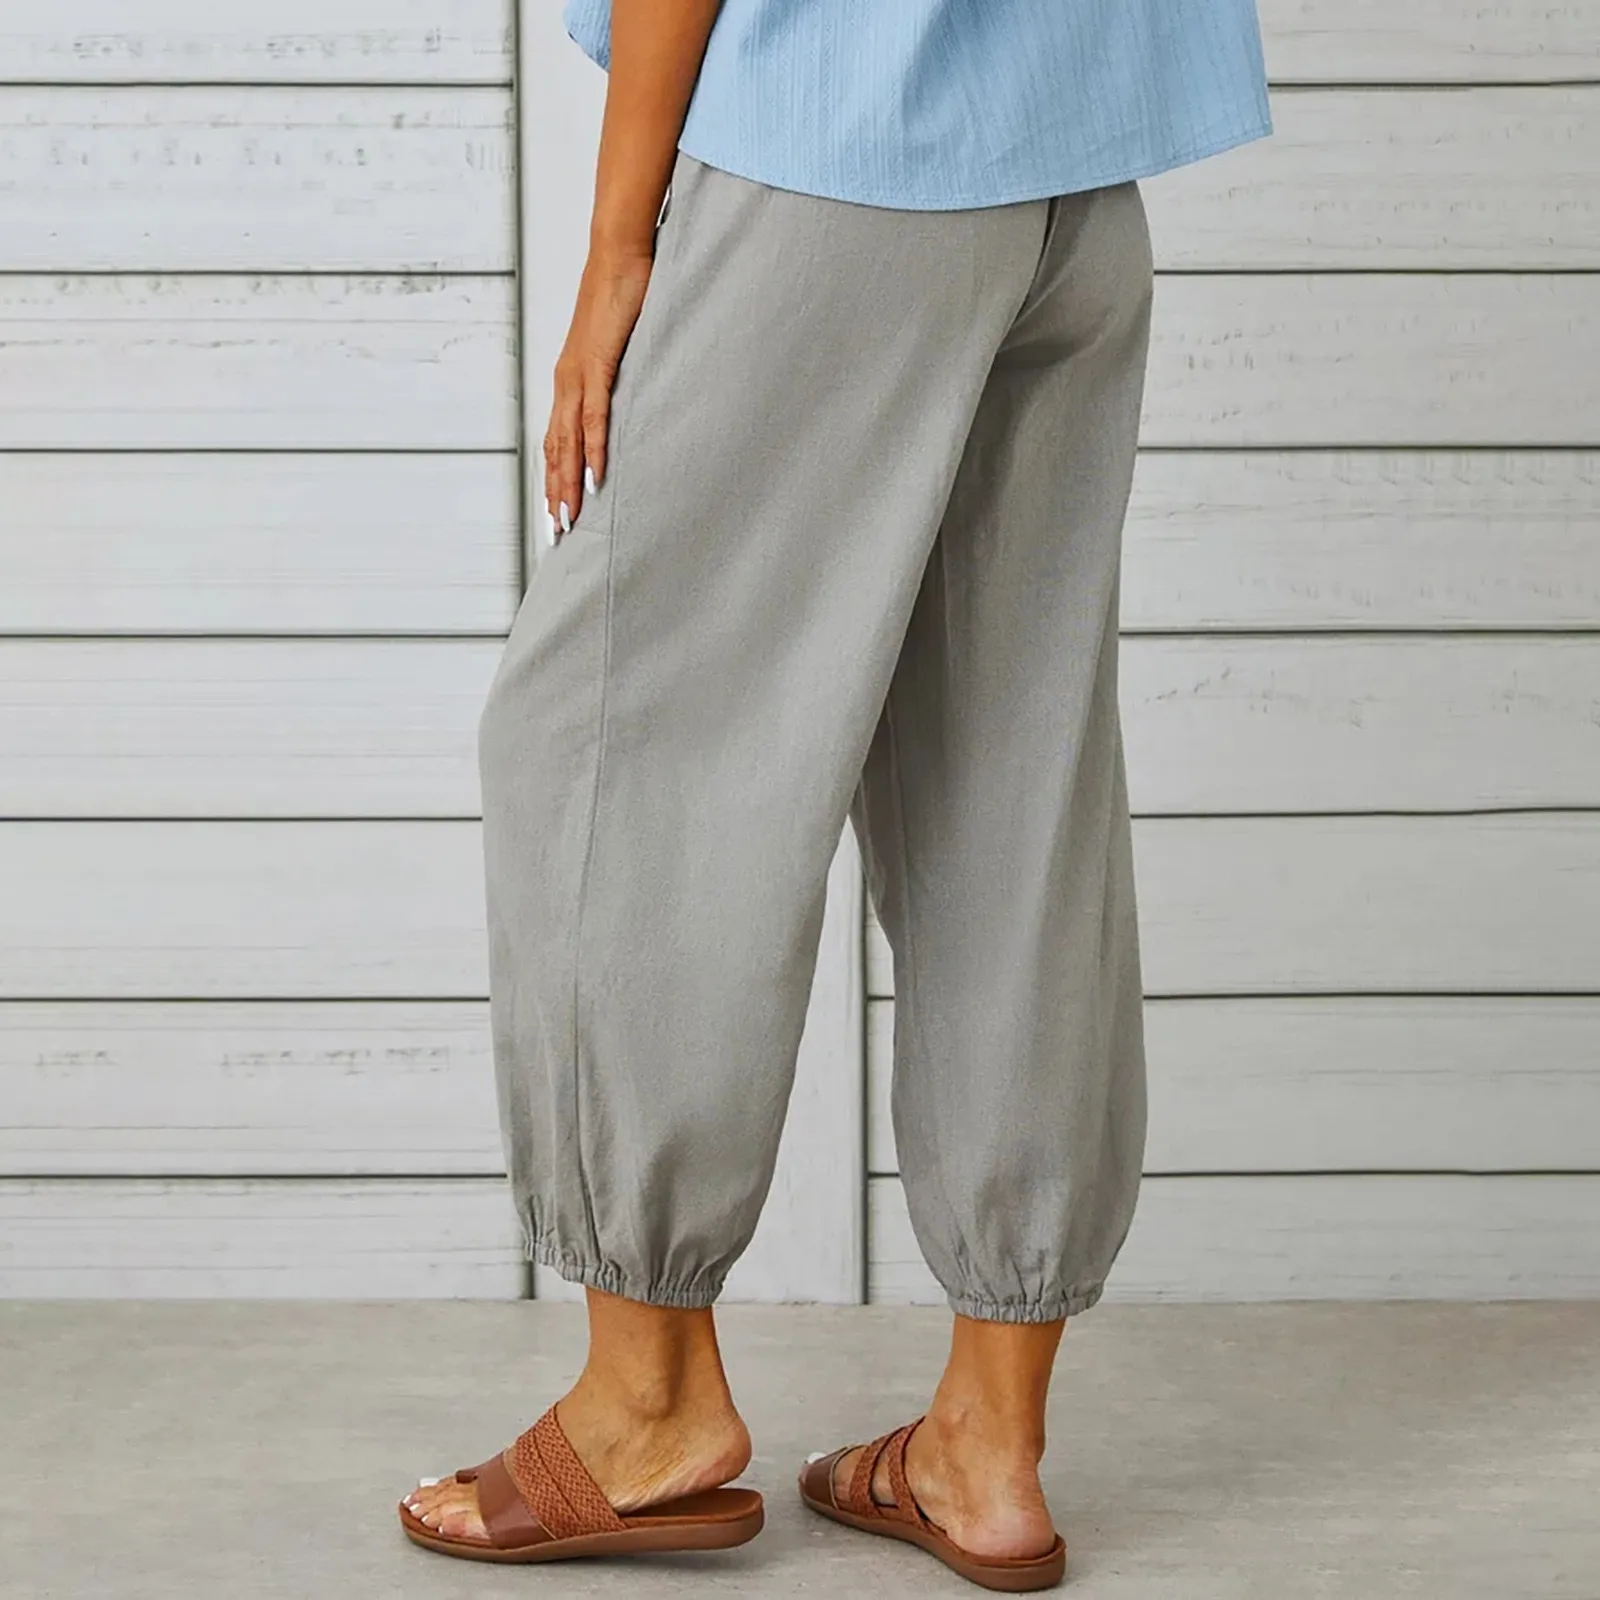 Plus Size Casual Wide Leg Pants Lady Cotton Linen Elastic Waist Pants Loose Summer Loose Grey Harem Pants Female Casual Trousers